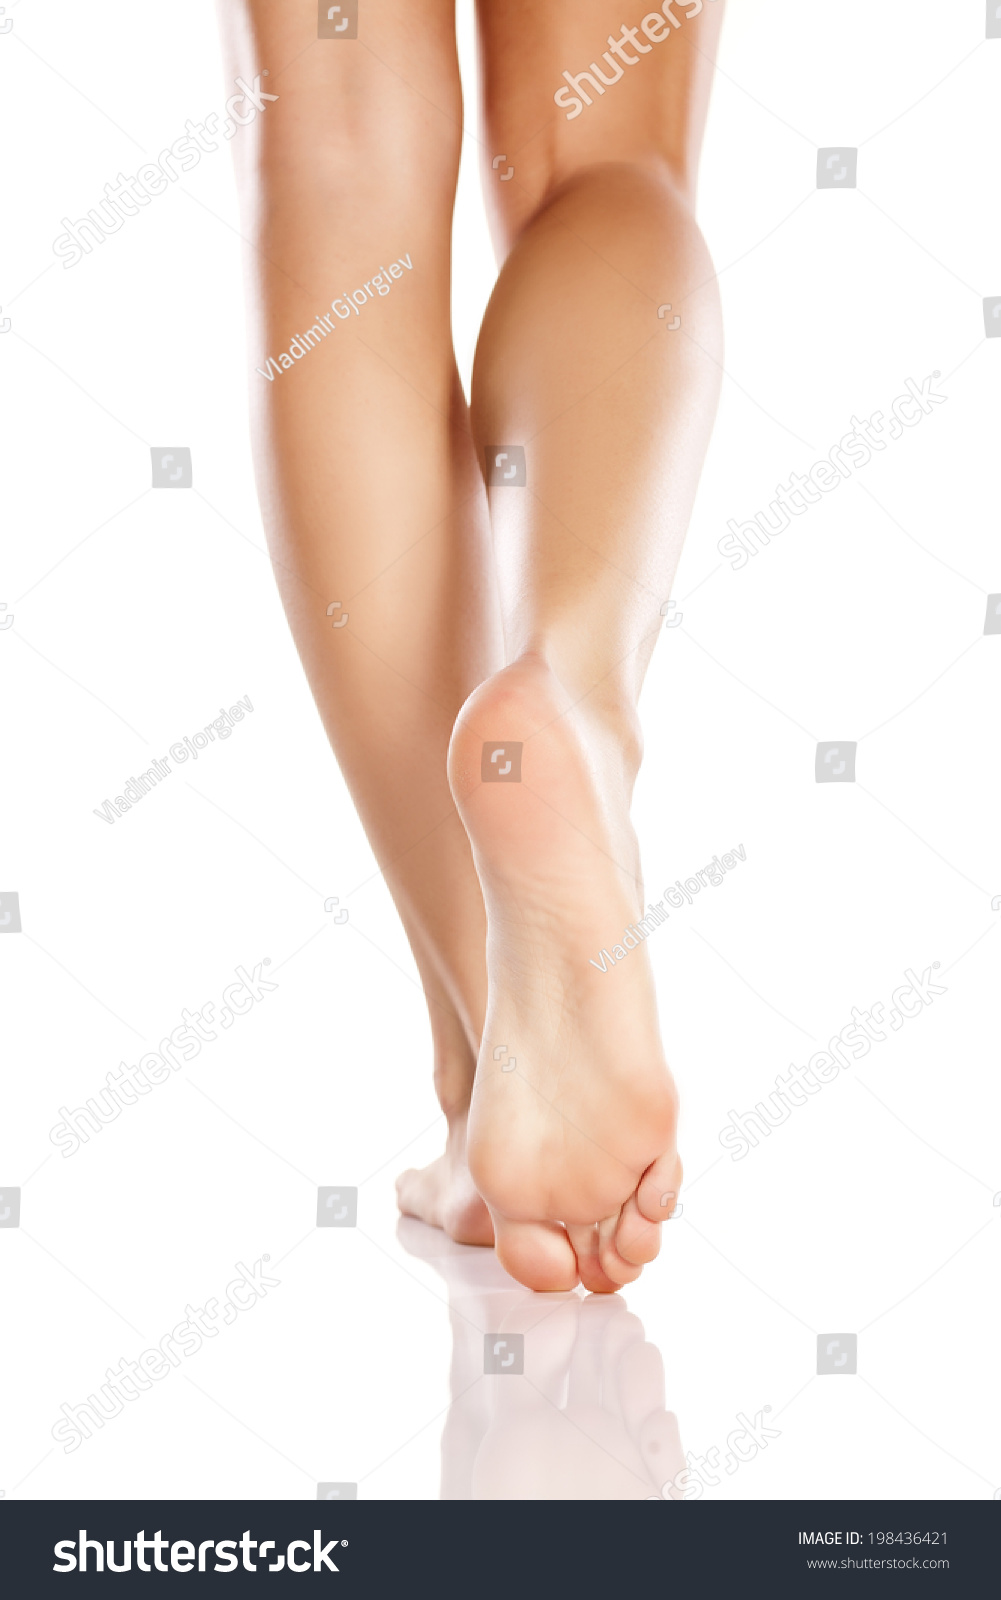 Female Feet Legs 46